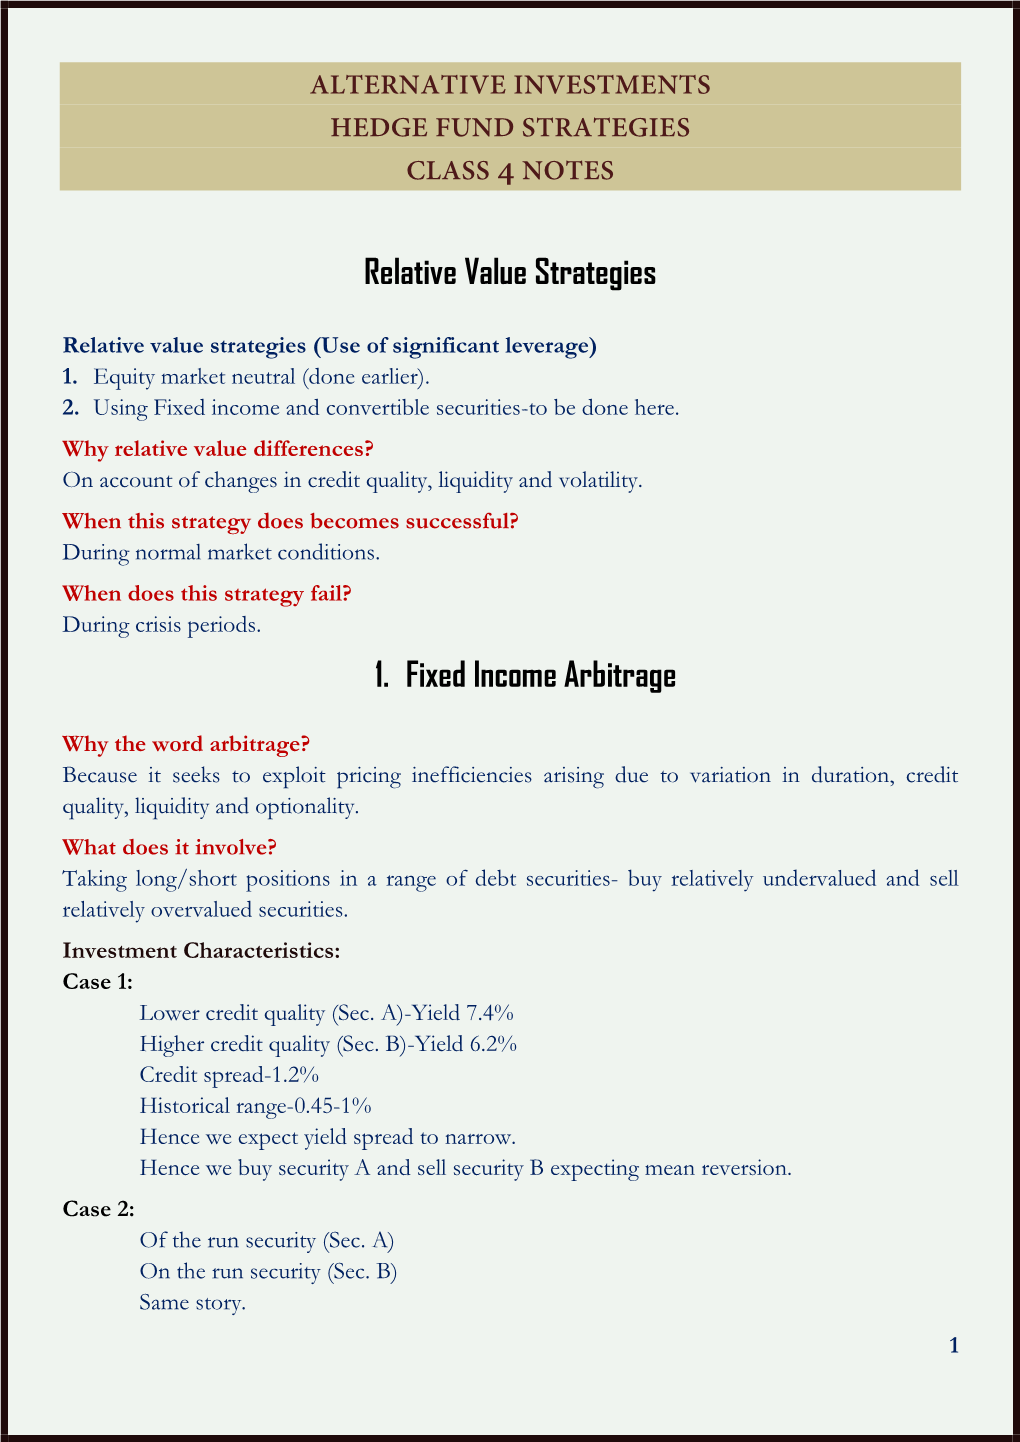 Relative Value Strategies 1. Fixed Income Arbitrage